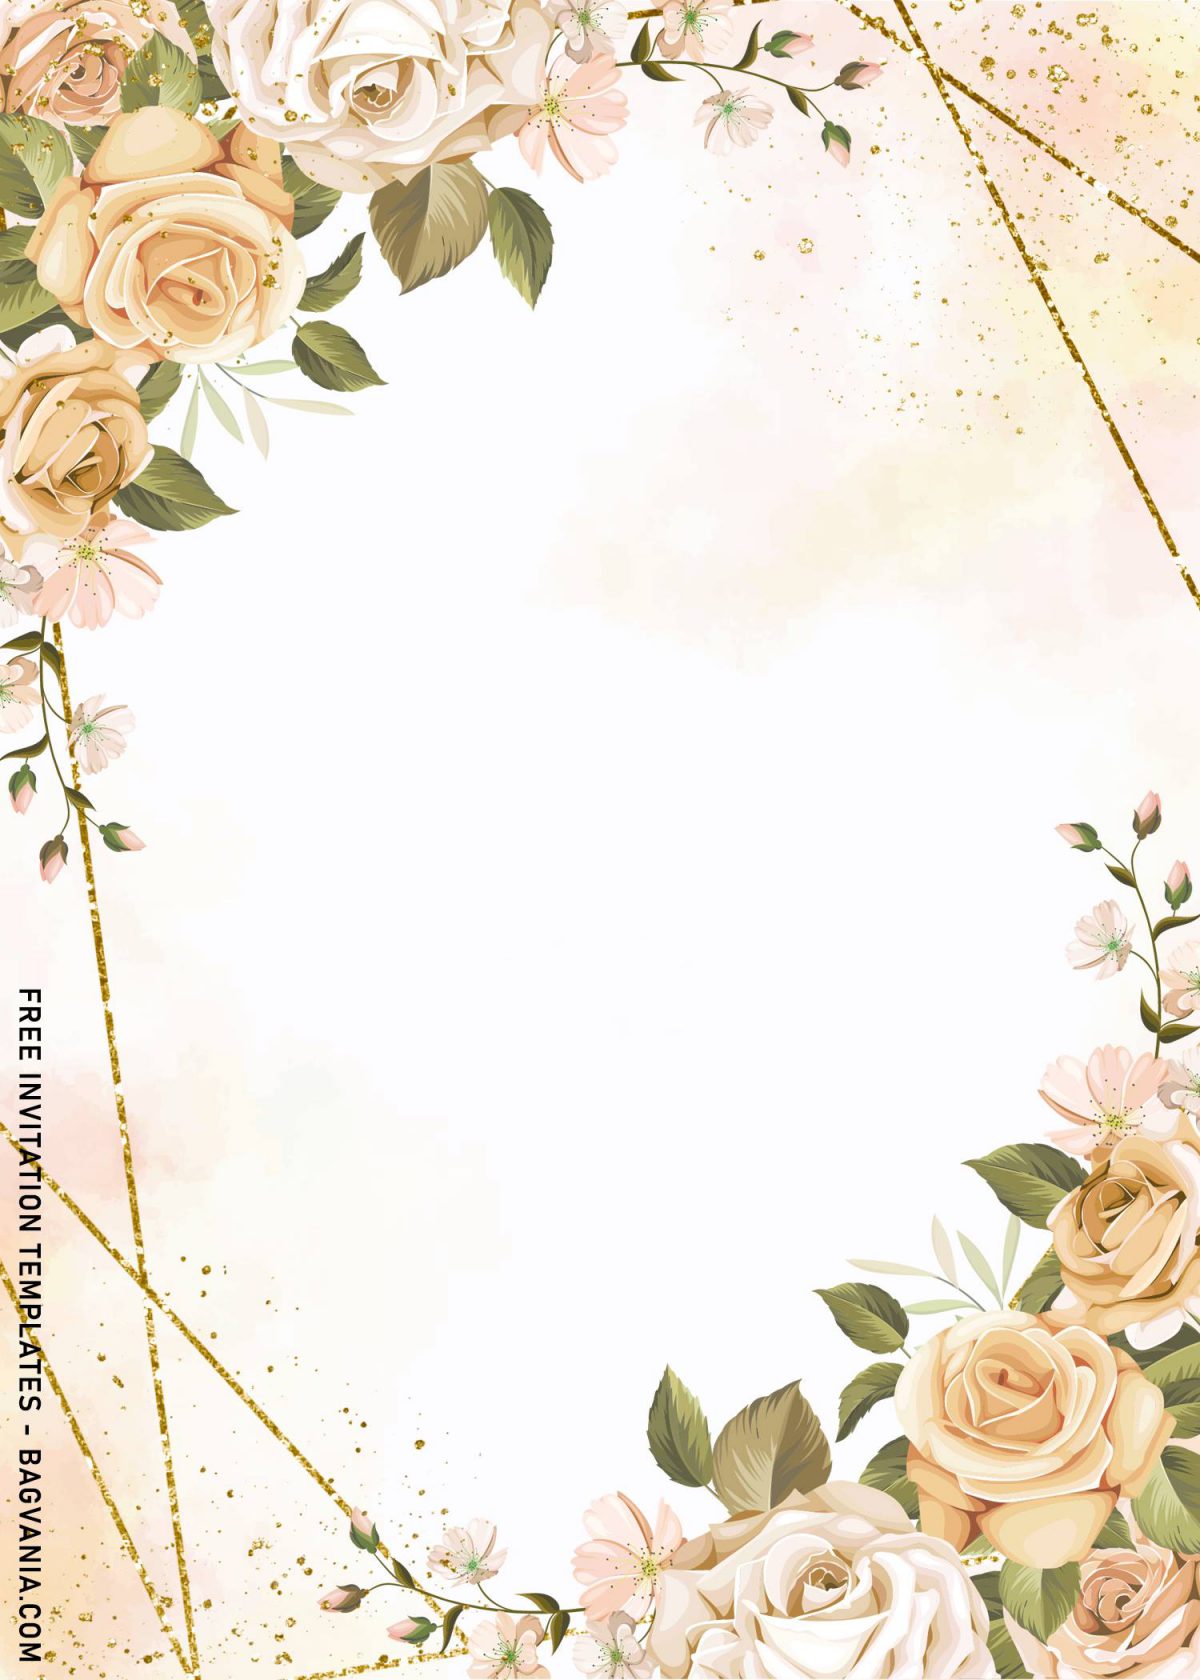 8+ Geometric Roses Wedding Invitation Templates and has stunning gold glitter geometric frame